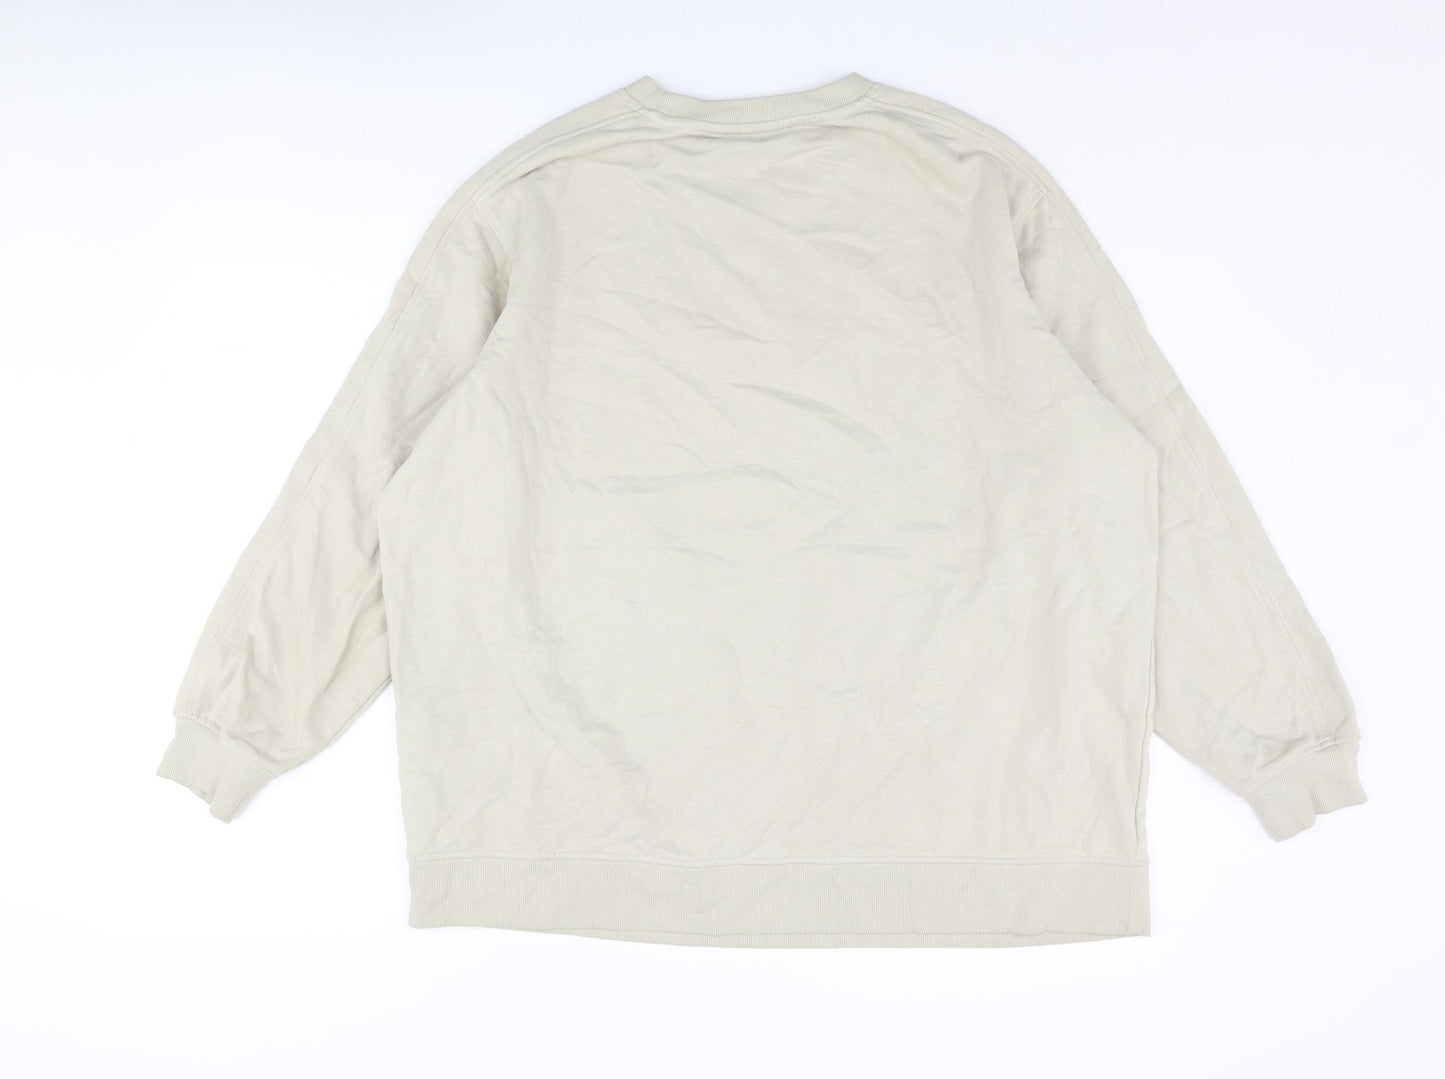 Marks and Spencer Mens Beige Cotton Pullover Sweatshirt Size M - Après Ski France